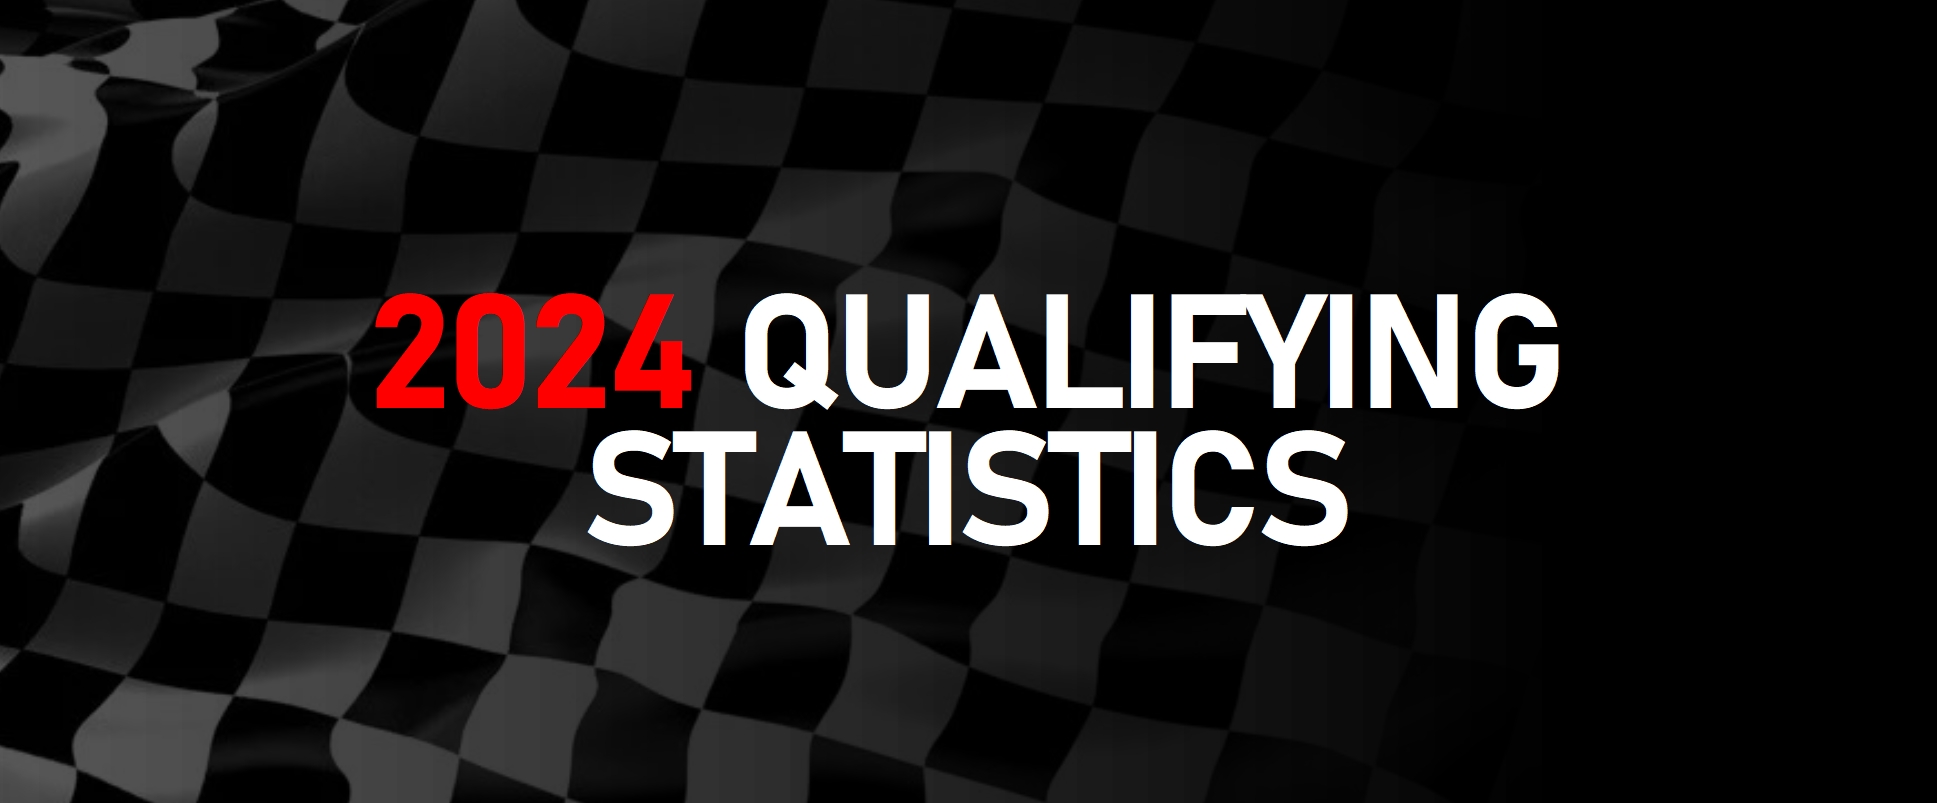 2024 F1 Qualifying Statistics Lights Out